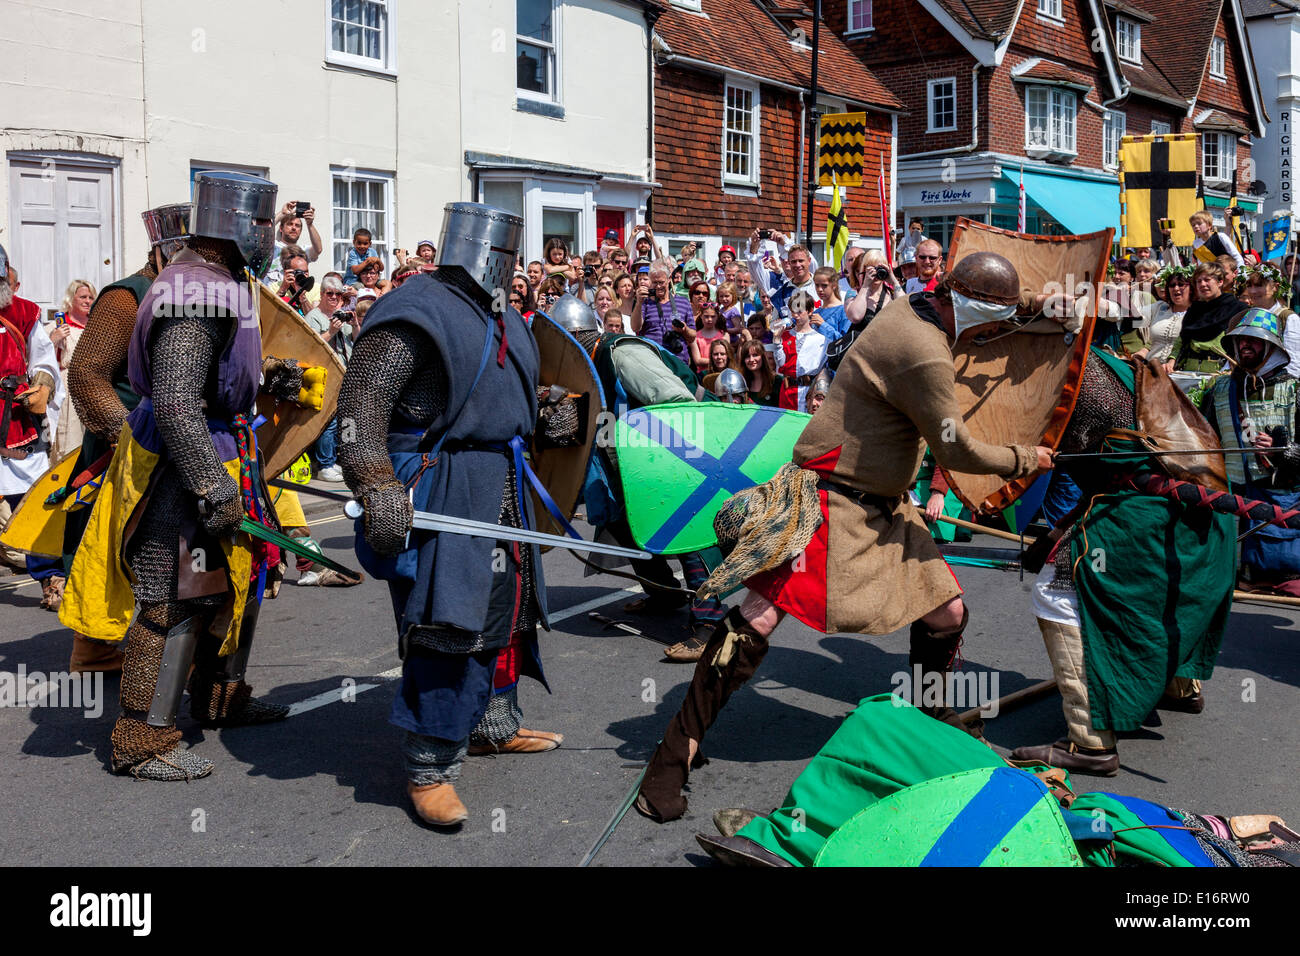 Persone locali in costume medievale Re-Enact la battaglia di Lewes nel 1264, Cliffe High Street, Lewes, Sussex, Inghilterra Foto Stock